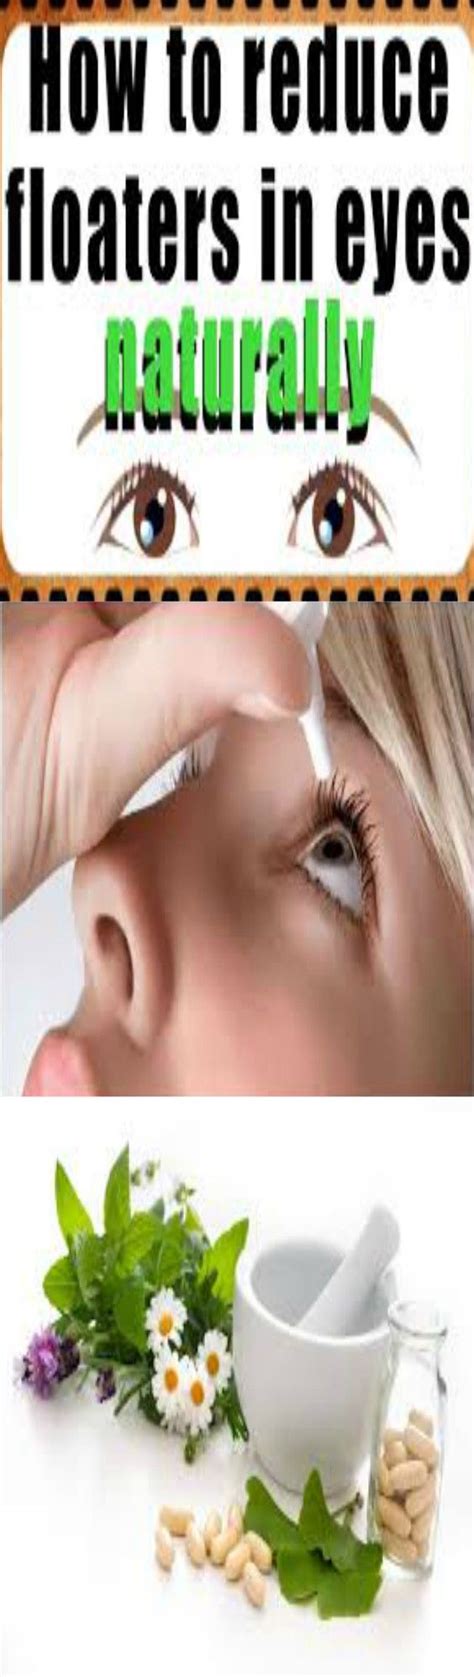 Top 15 home remedies for eye floaters | Holistic health remedies, Eye ...